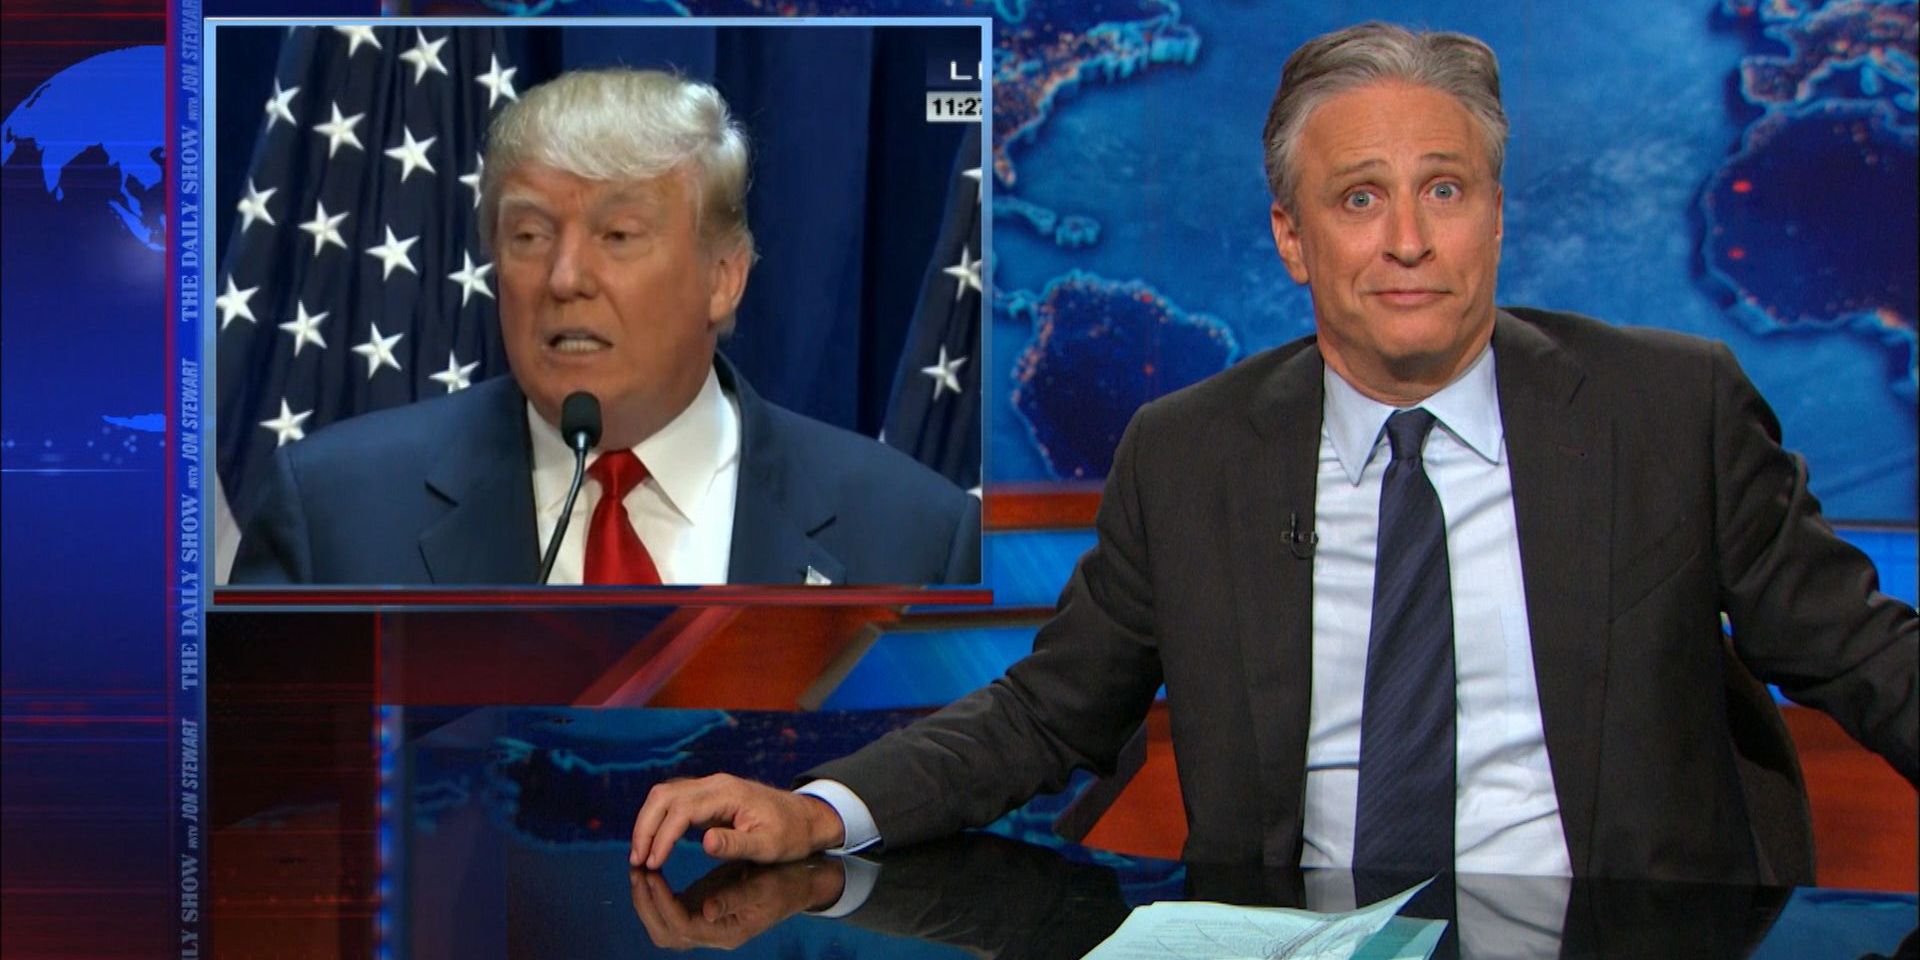 Jon Stewart hosting a Daily Show segment on Donald Trump.